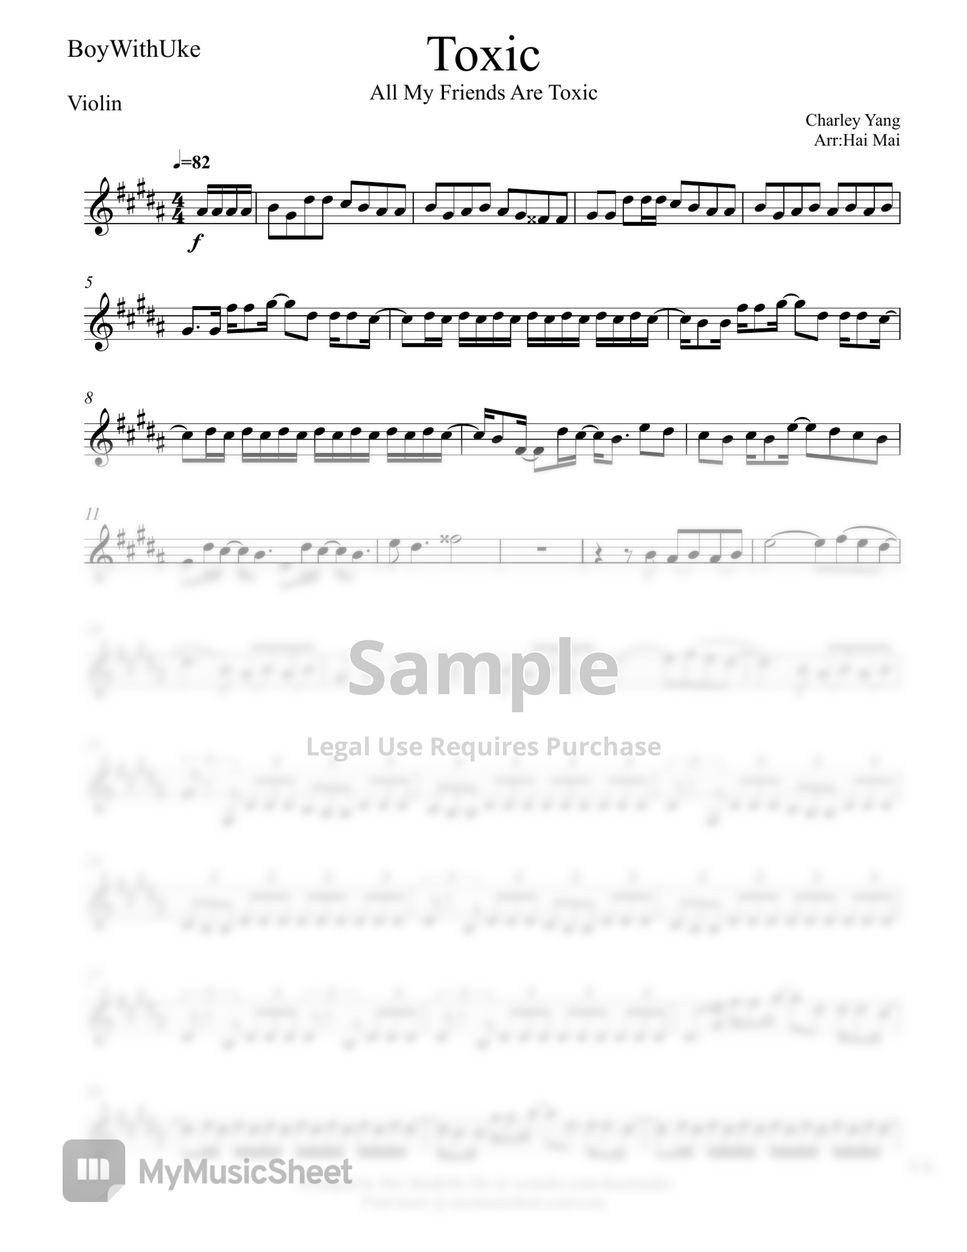 BoyWithUke - TOXIC violin sheet